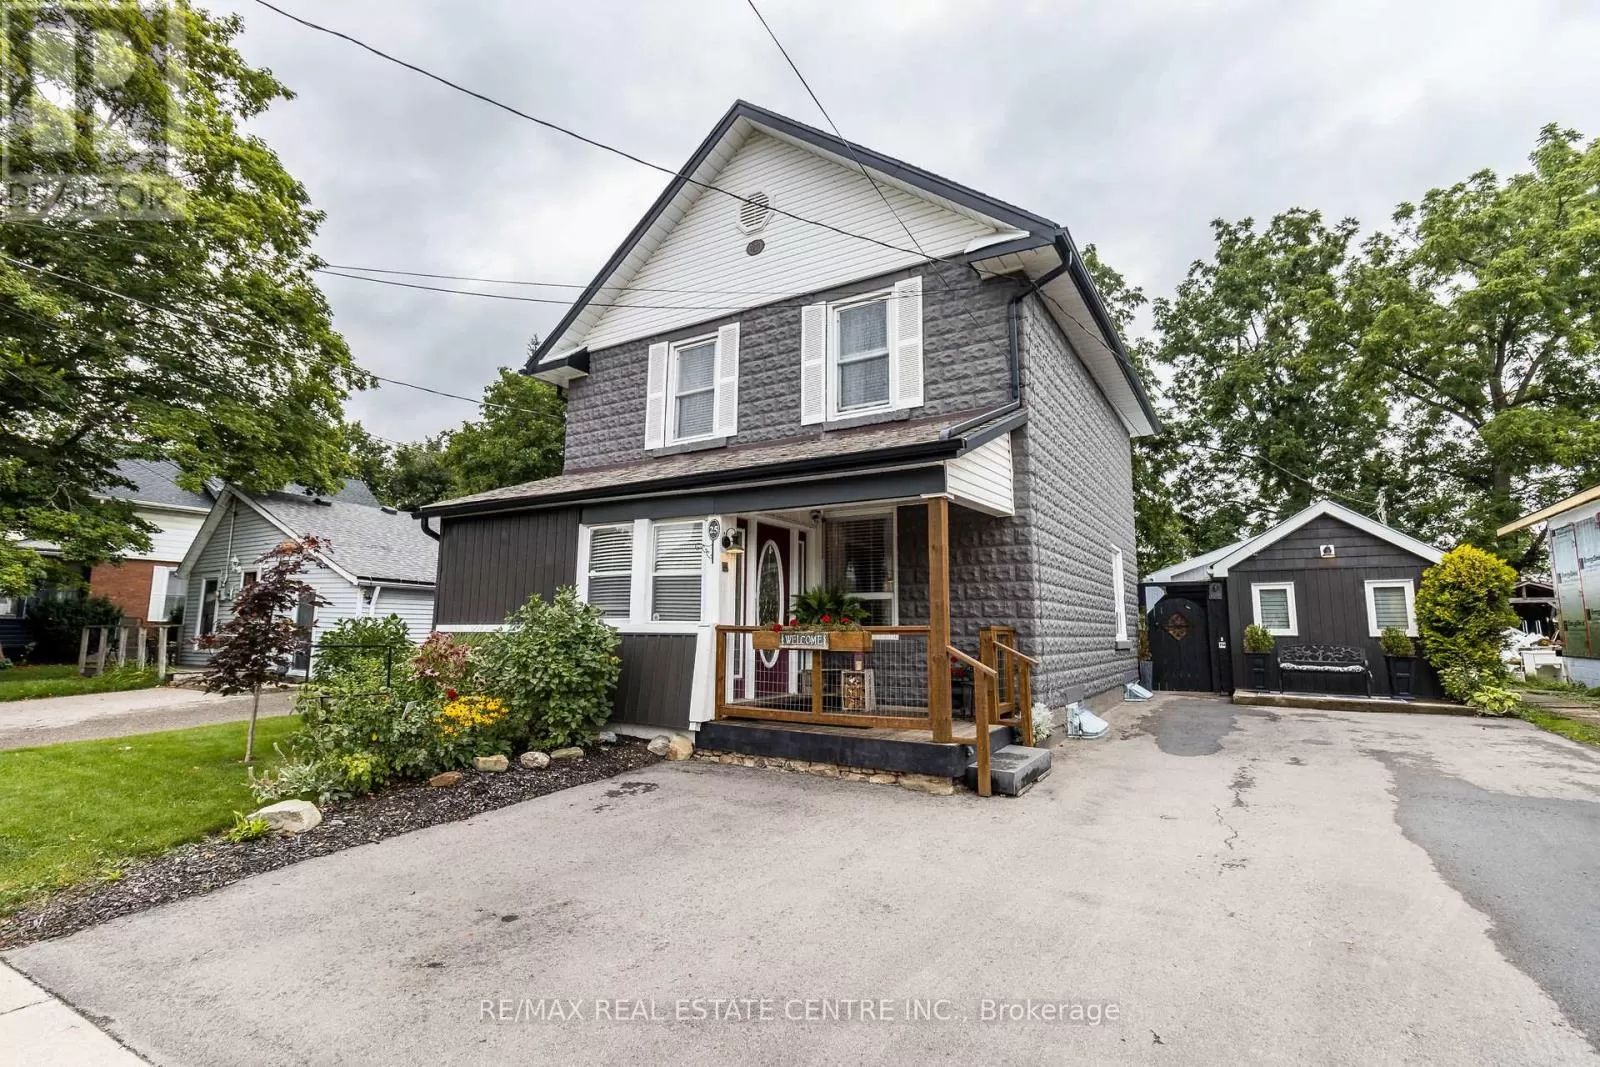 House for rent: 25 Victoria Street, Halton Hills, Ontario L7G 3N5